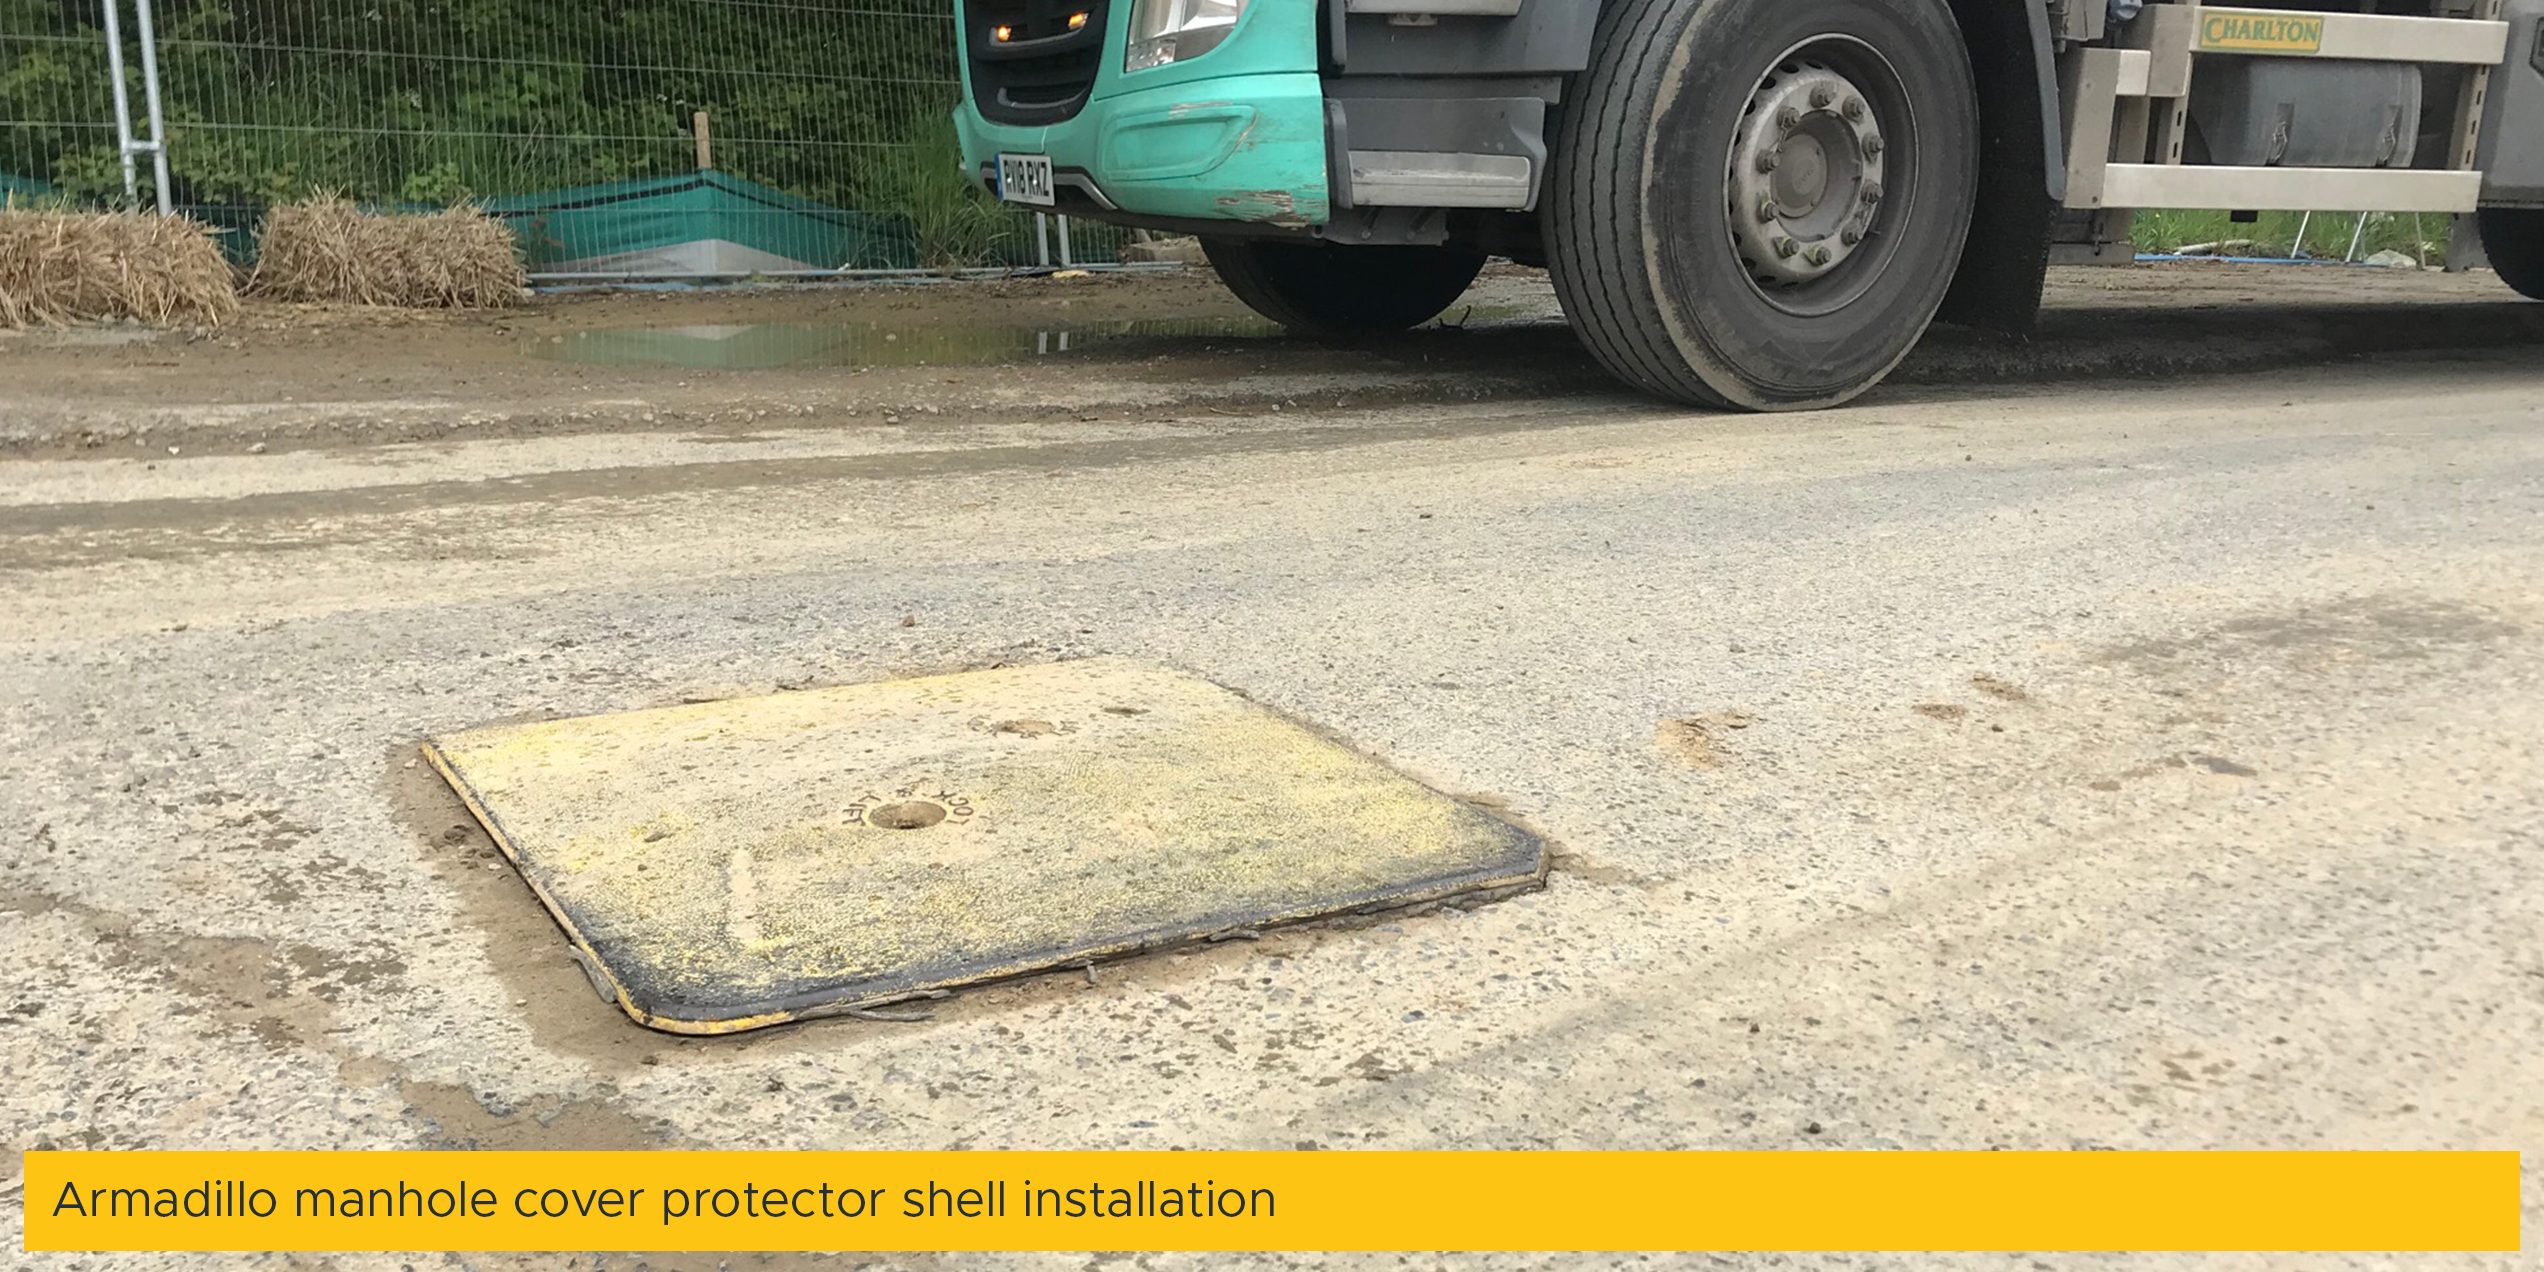 Armadillo manhole cover protector shell installation